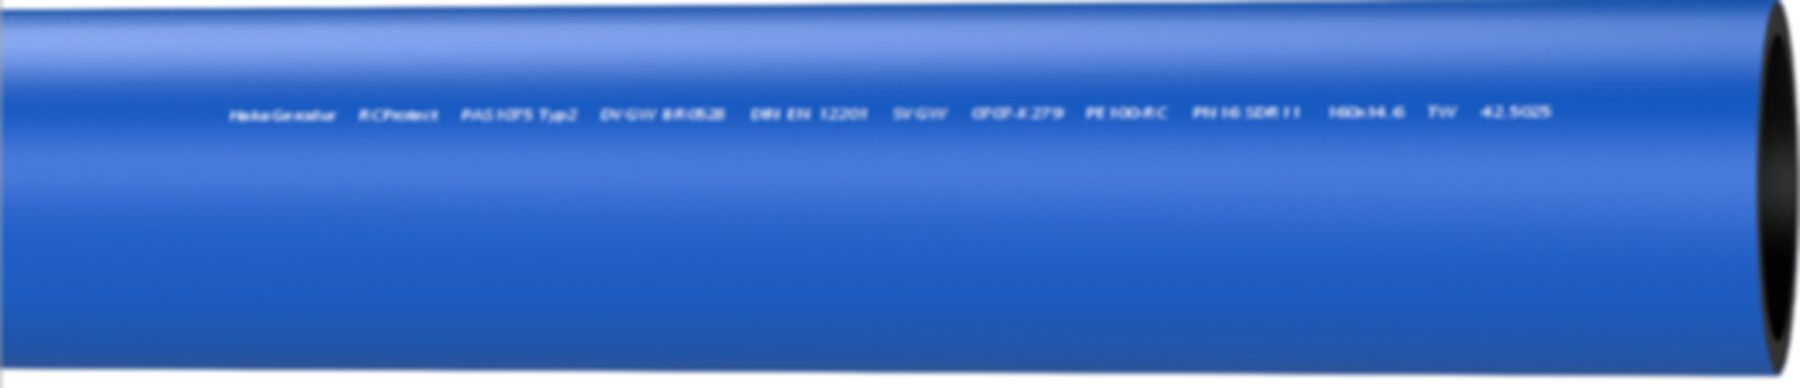 Druckrohr Wasser PE 100RC, SDR 17, PN 10 d 400 x 23.7mm - RCprotect in Stangen